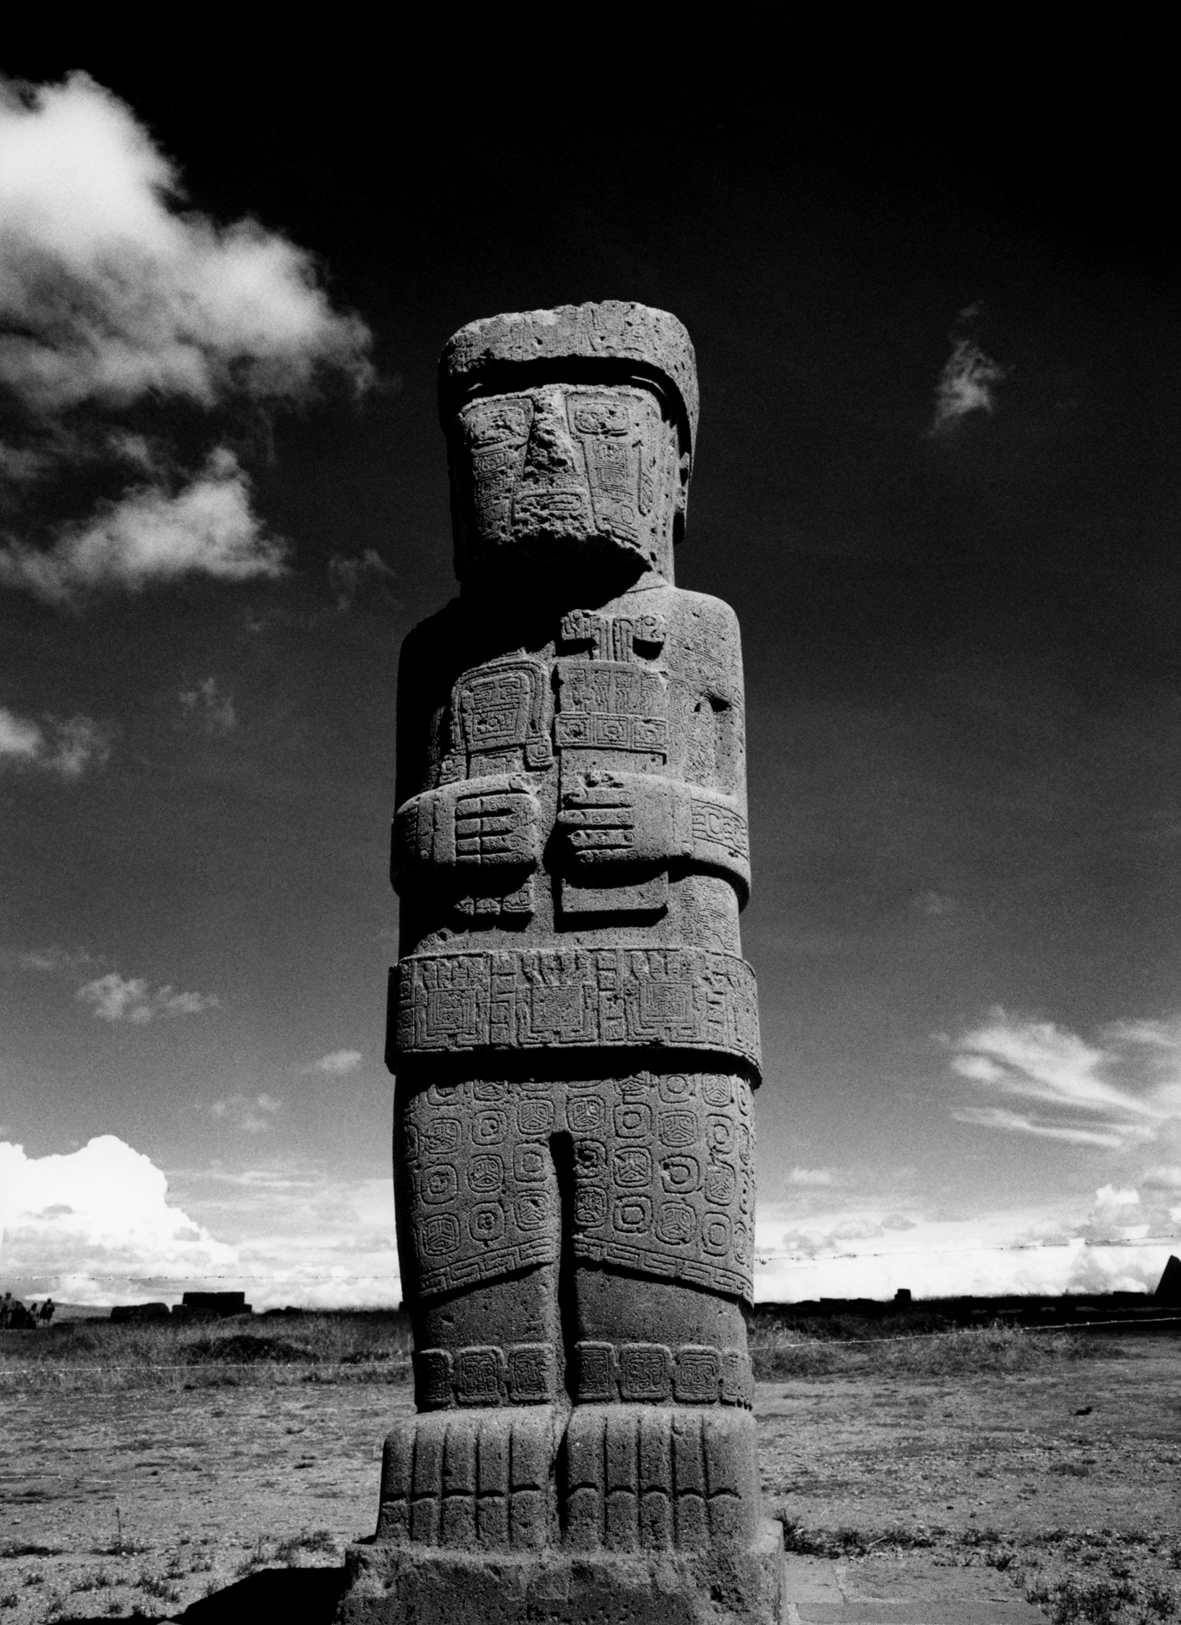 amérique latine perou bolivie mexique chichen itza macchu picchu Nazca Tiwanaku cordillère des andes Maya inca Altiplano yucatán UNESCO Titicaca